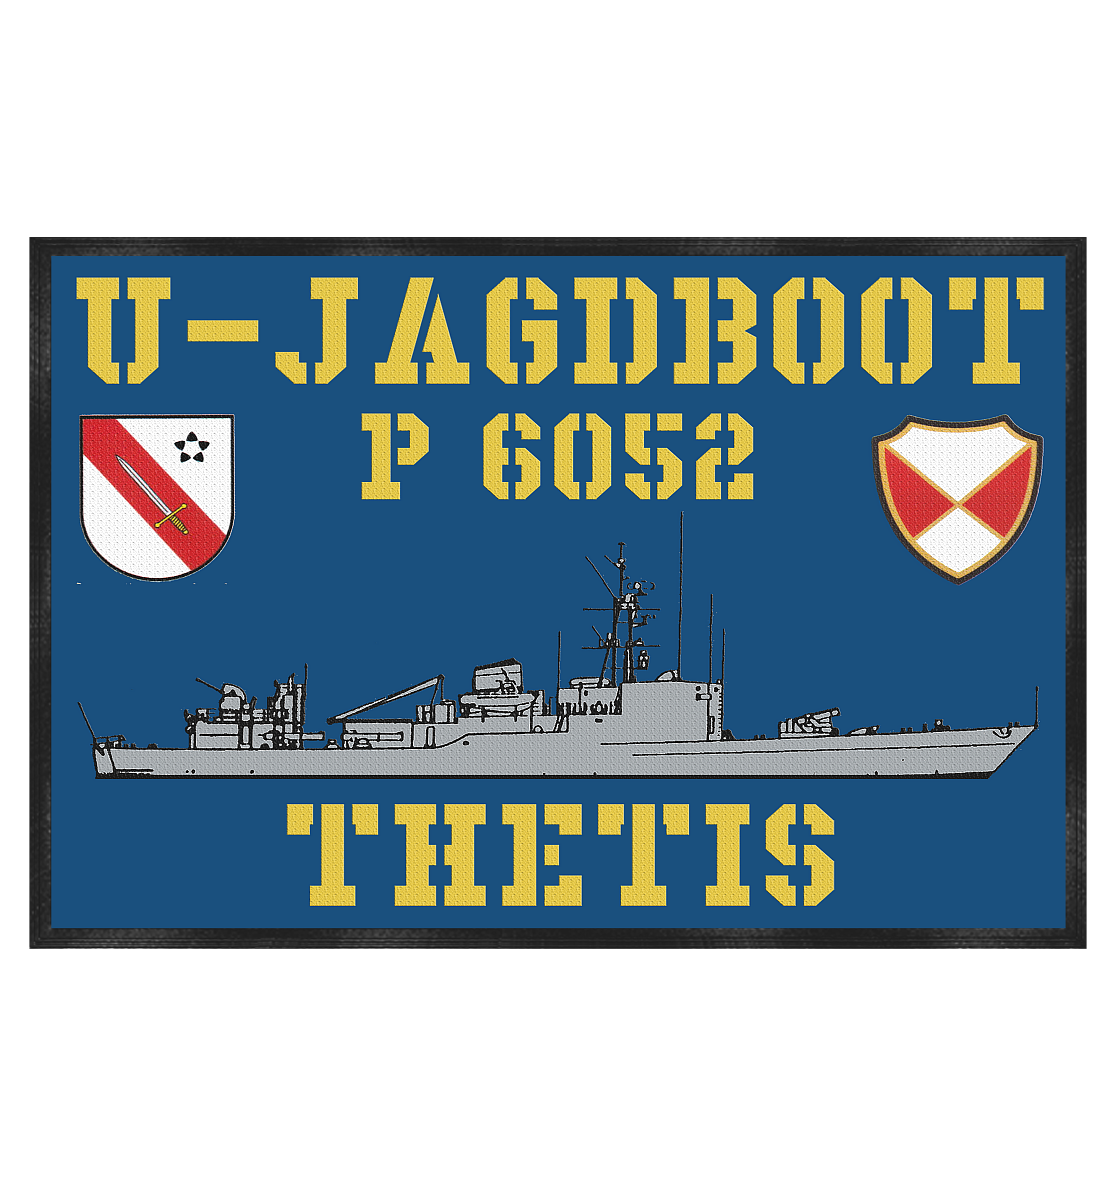 Fußmatte U-Jagdboot P6052 THETIS - Fußmatte 60x40cm